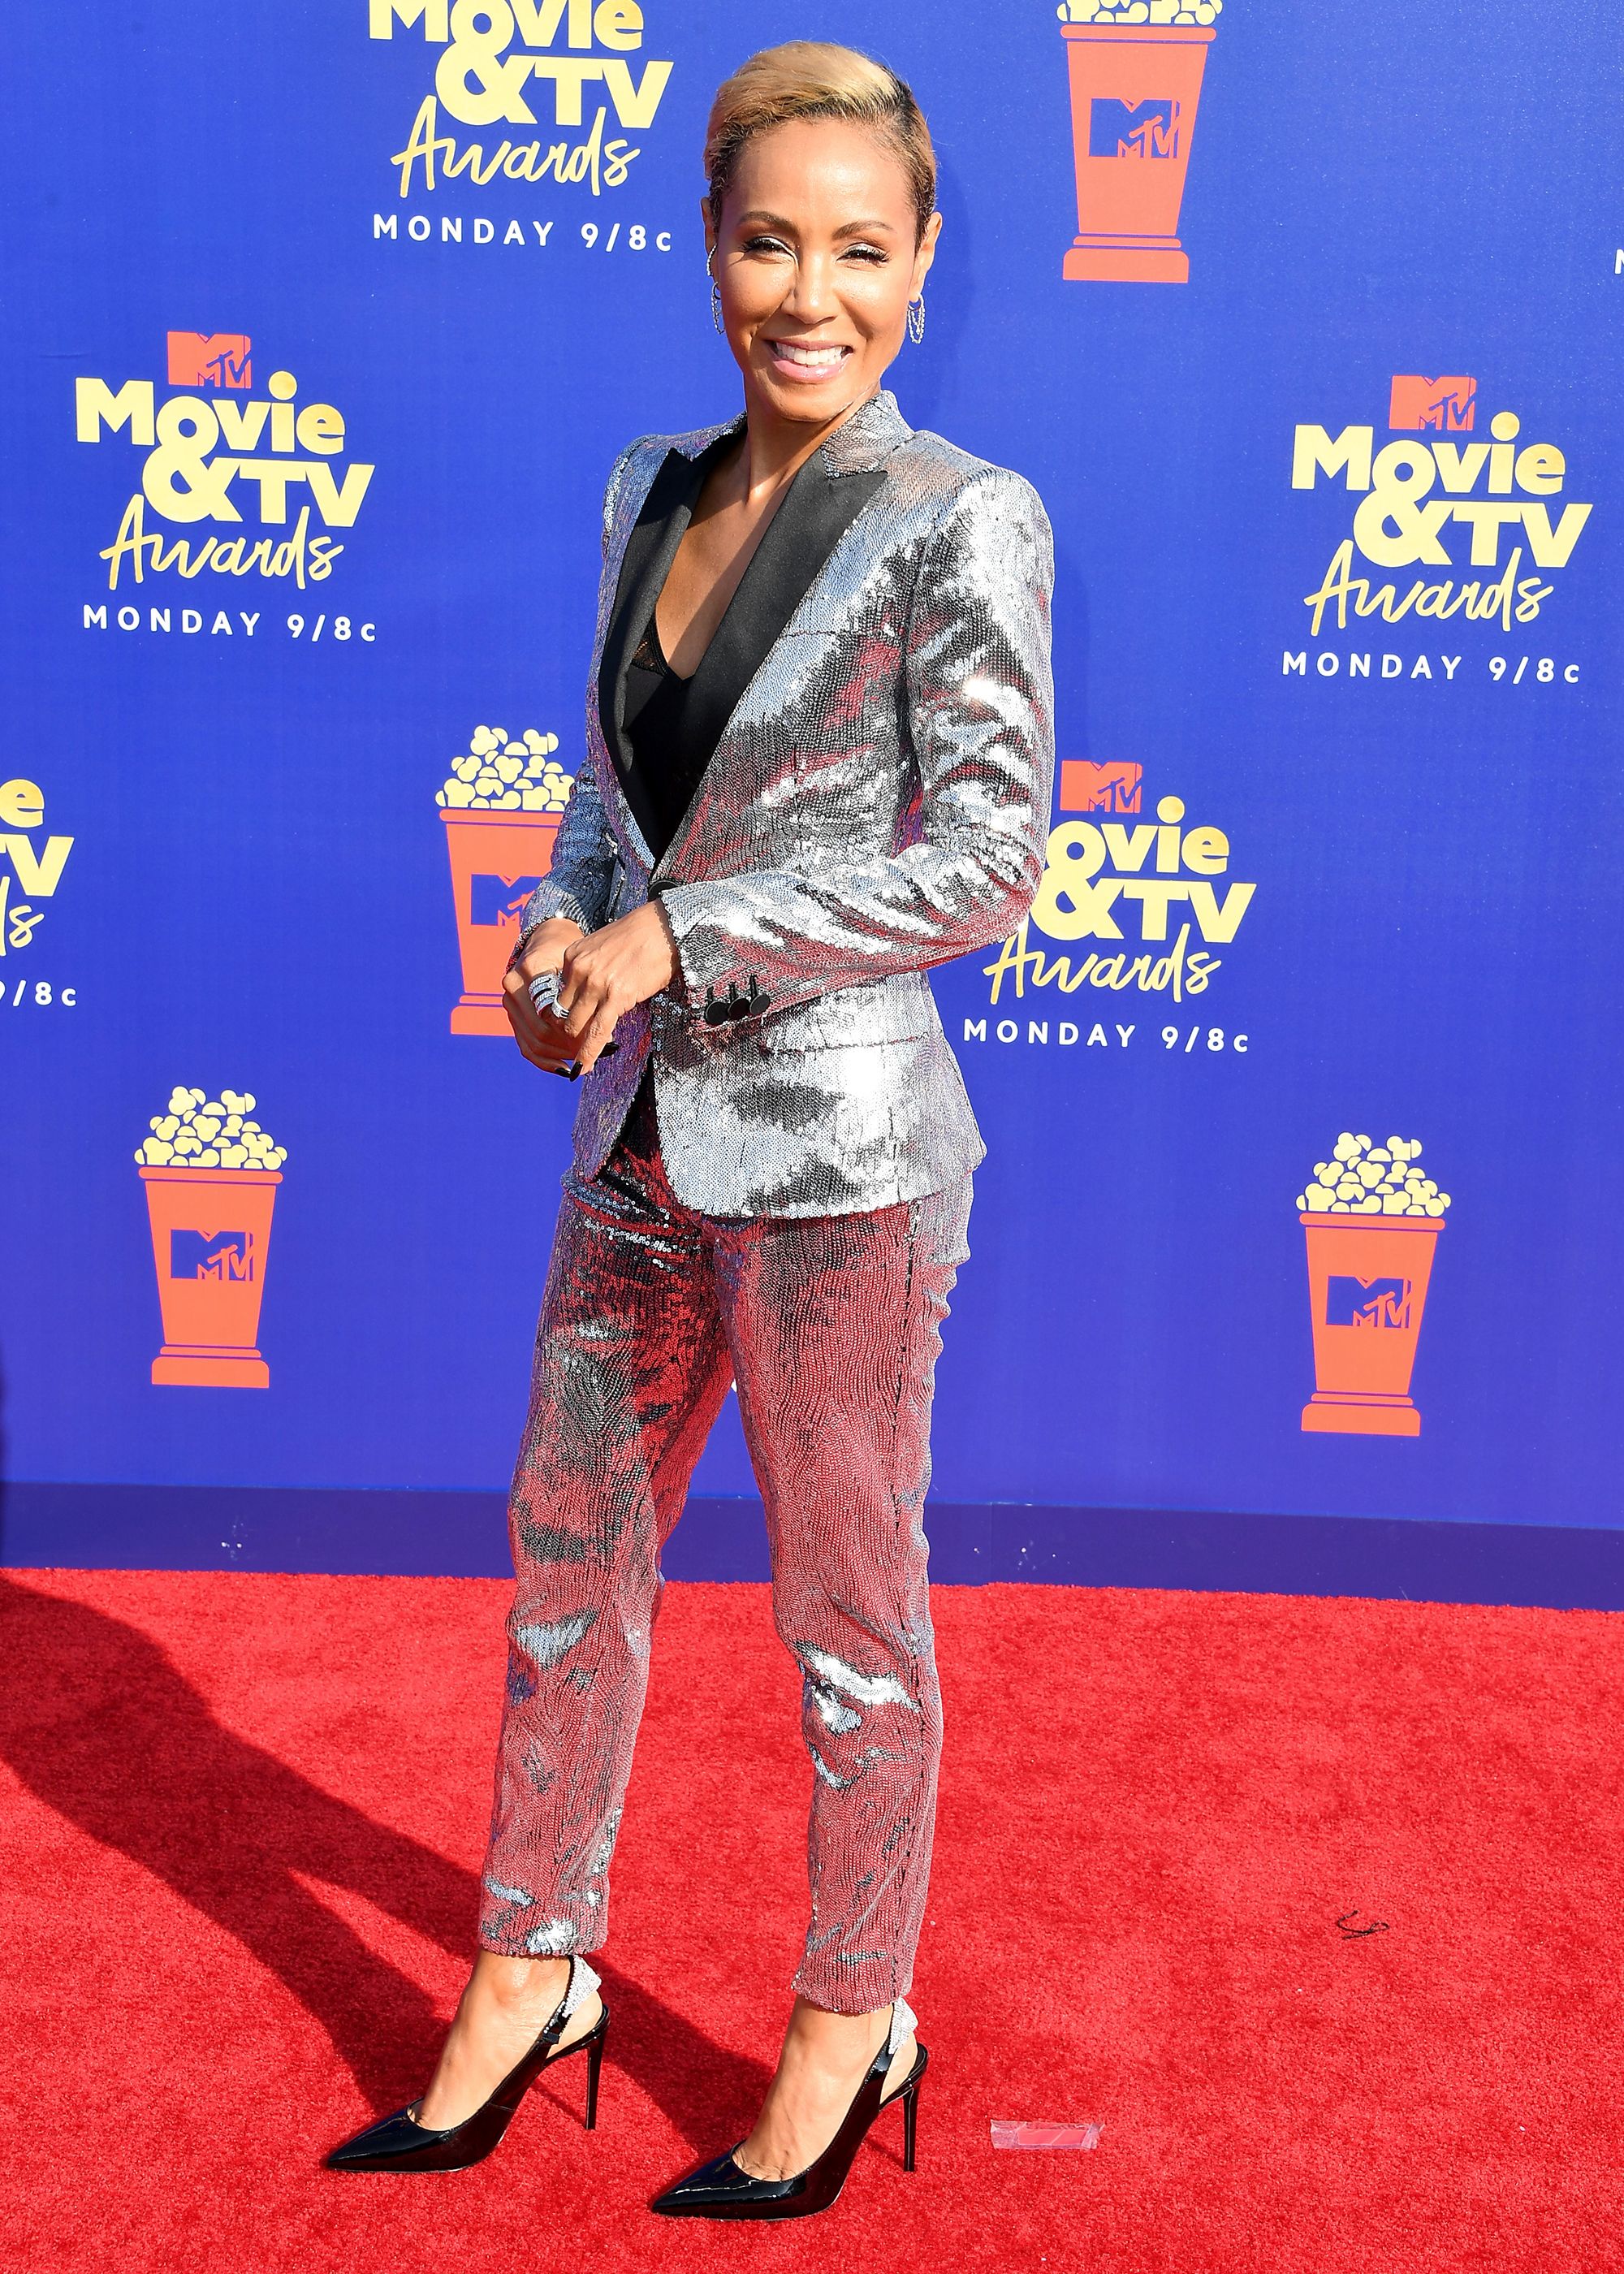 MTV Movie TV Awards Red Carpet photos,